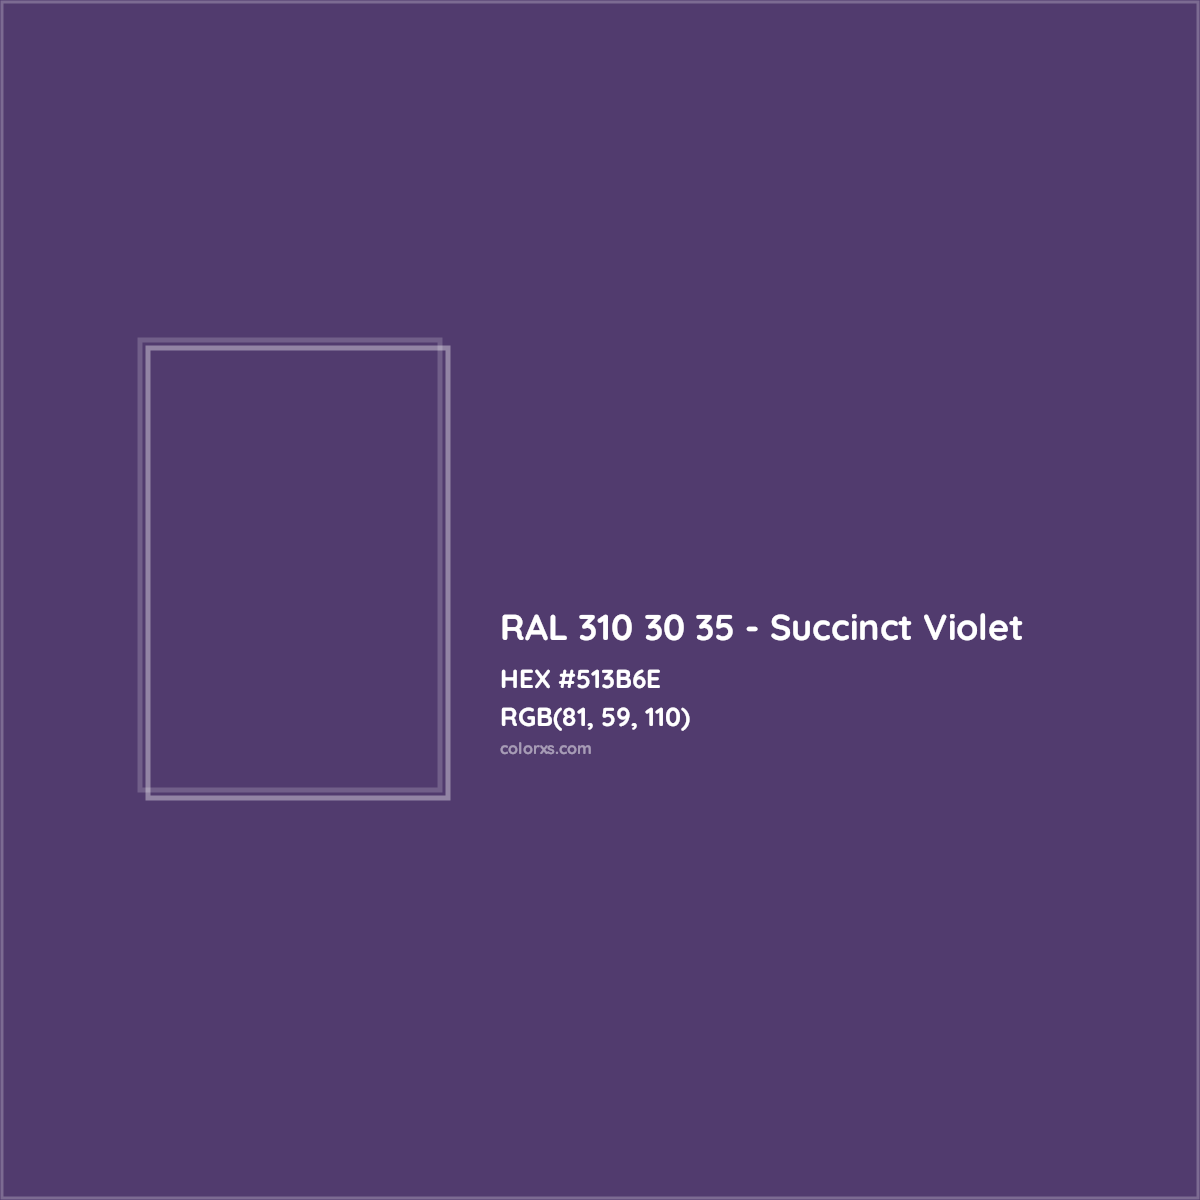 HEX #513B6E RAL 310 30 35 - Succinct Violet CMS RAL Design - Color Code